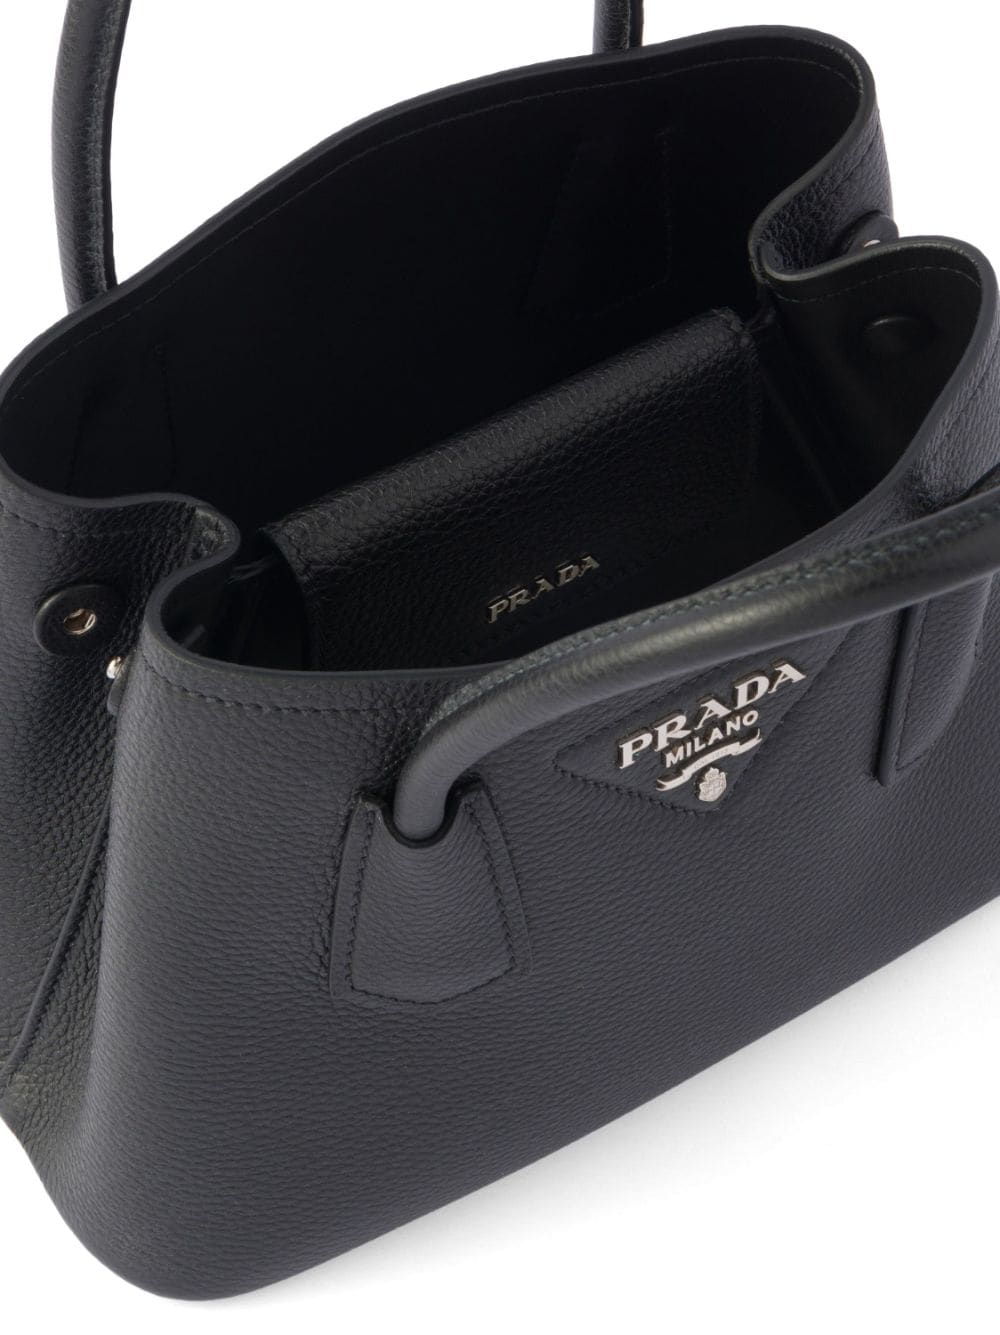 Prada Women's Mini Saffiano Leather Double-zip Satchel - Black in Blue